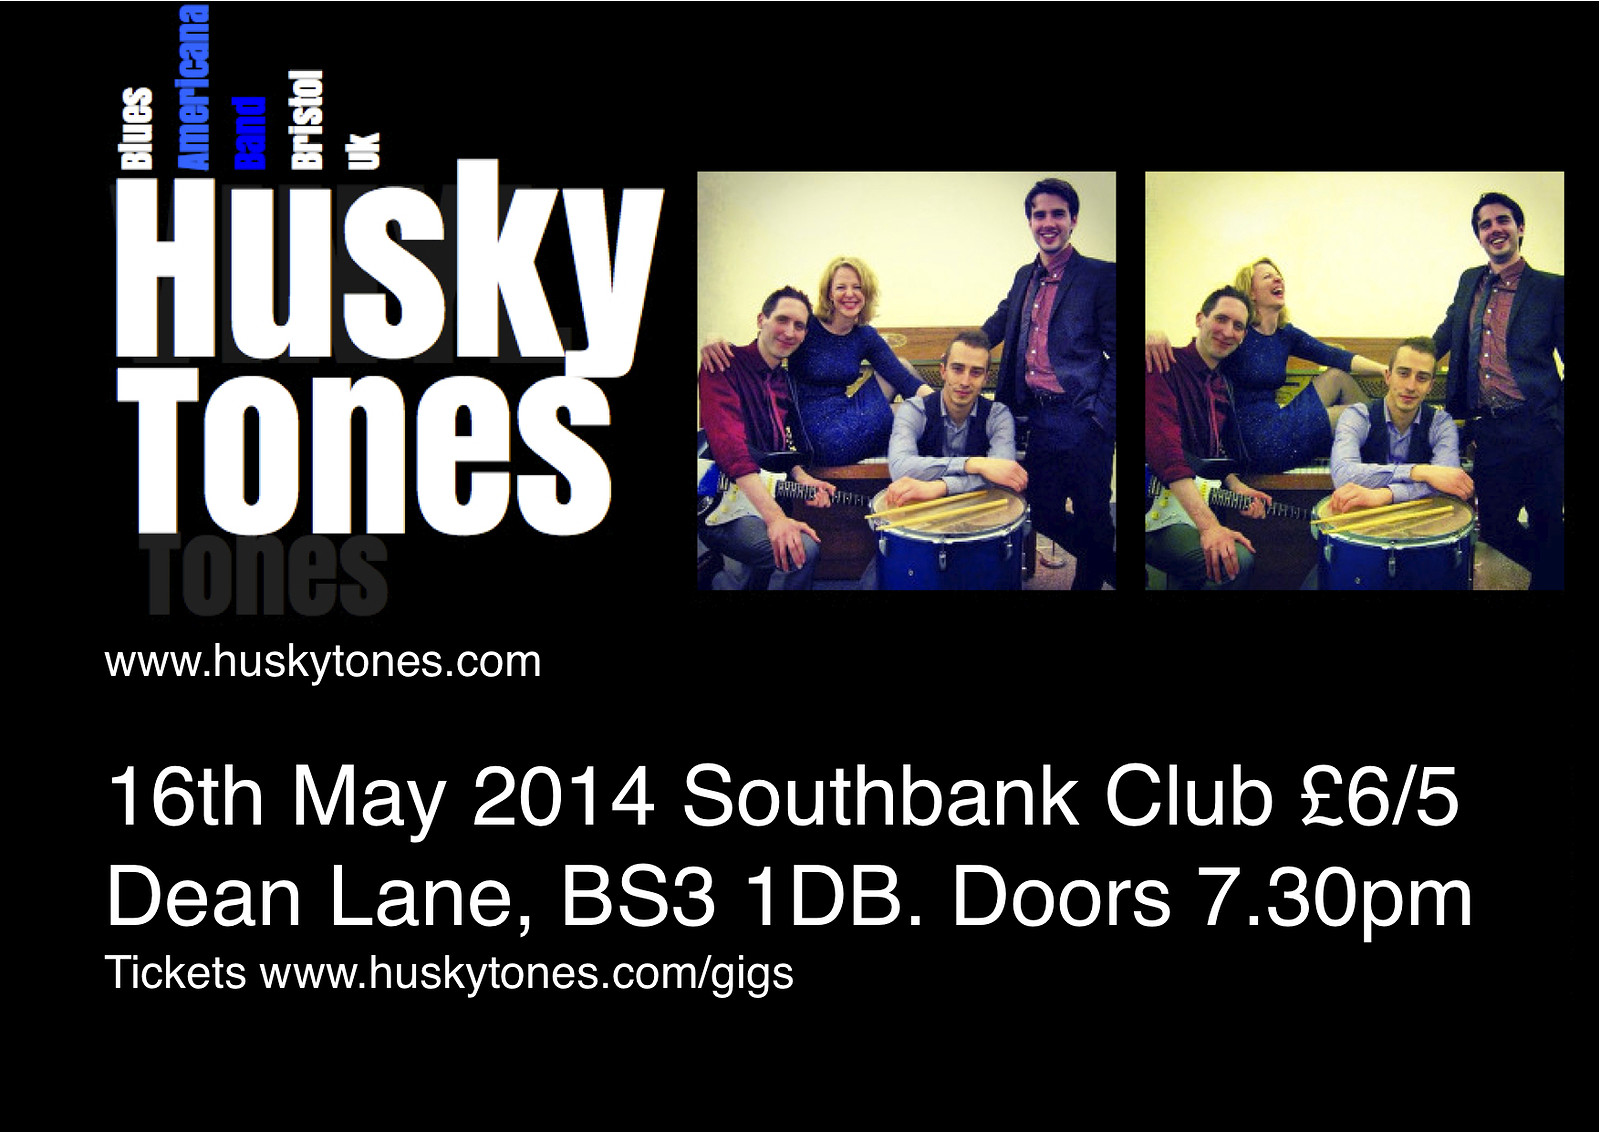 Huskytones at Southbank Club